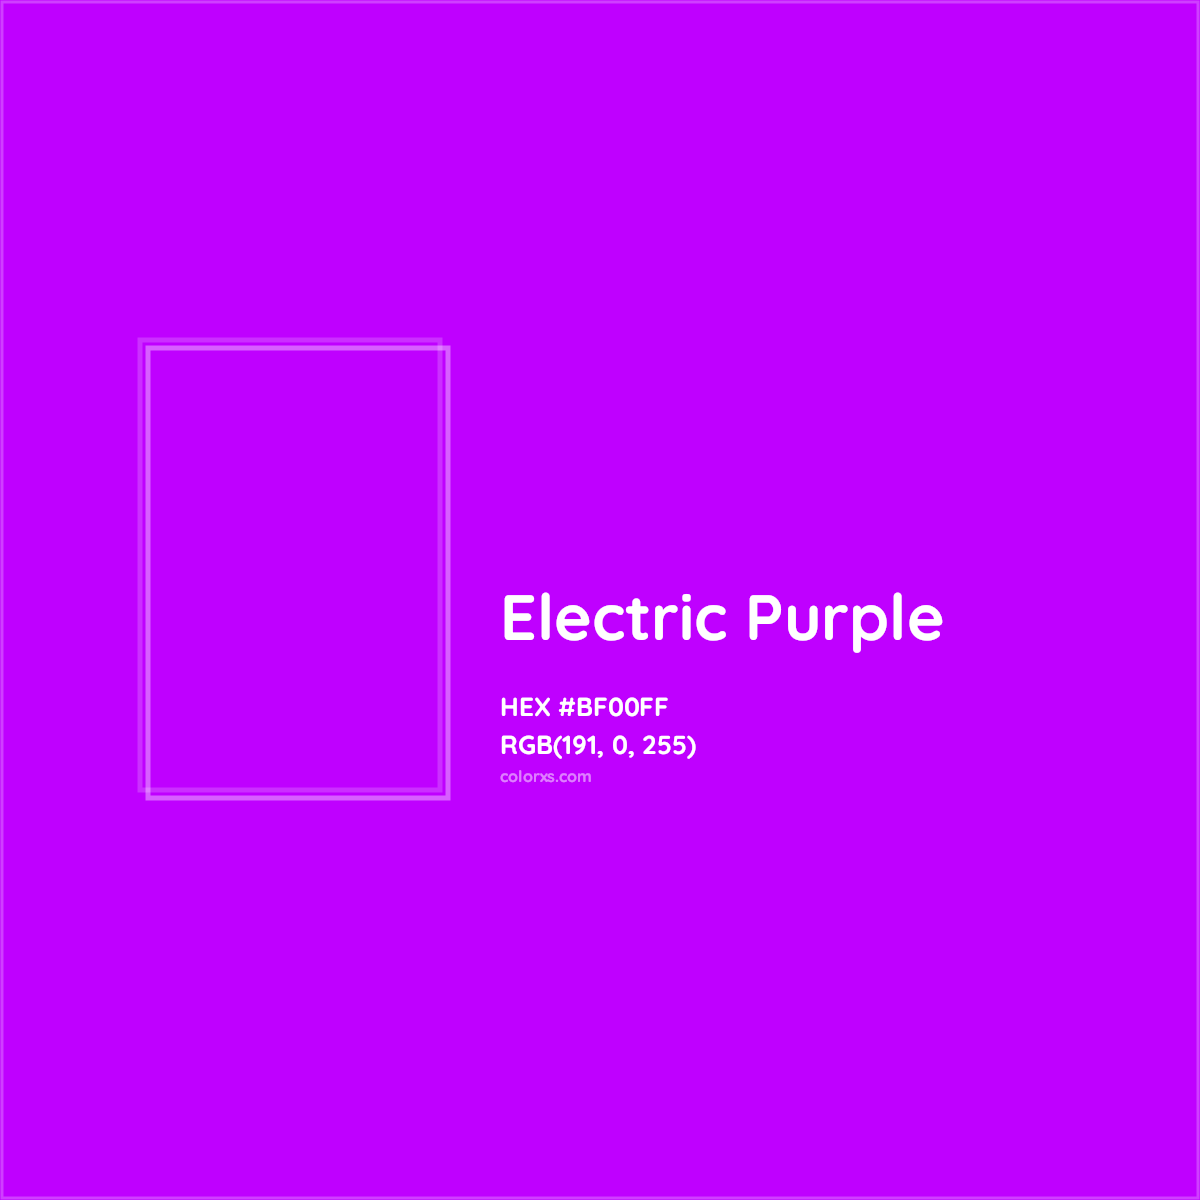 HEX #BF00FF Electric Purple Color - Color Code